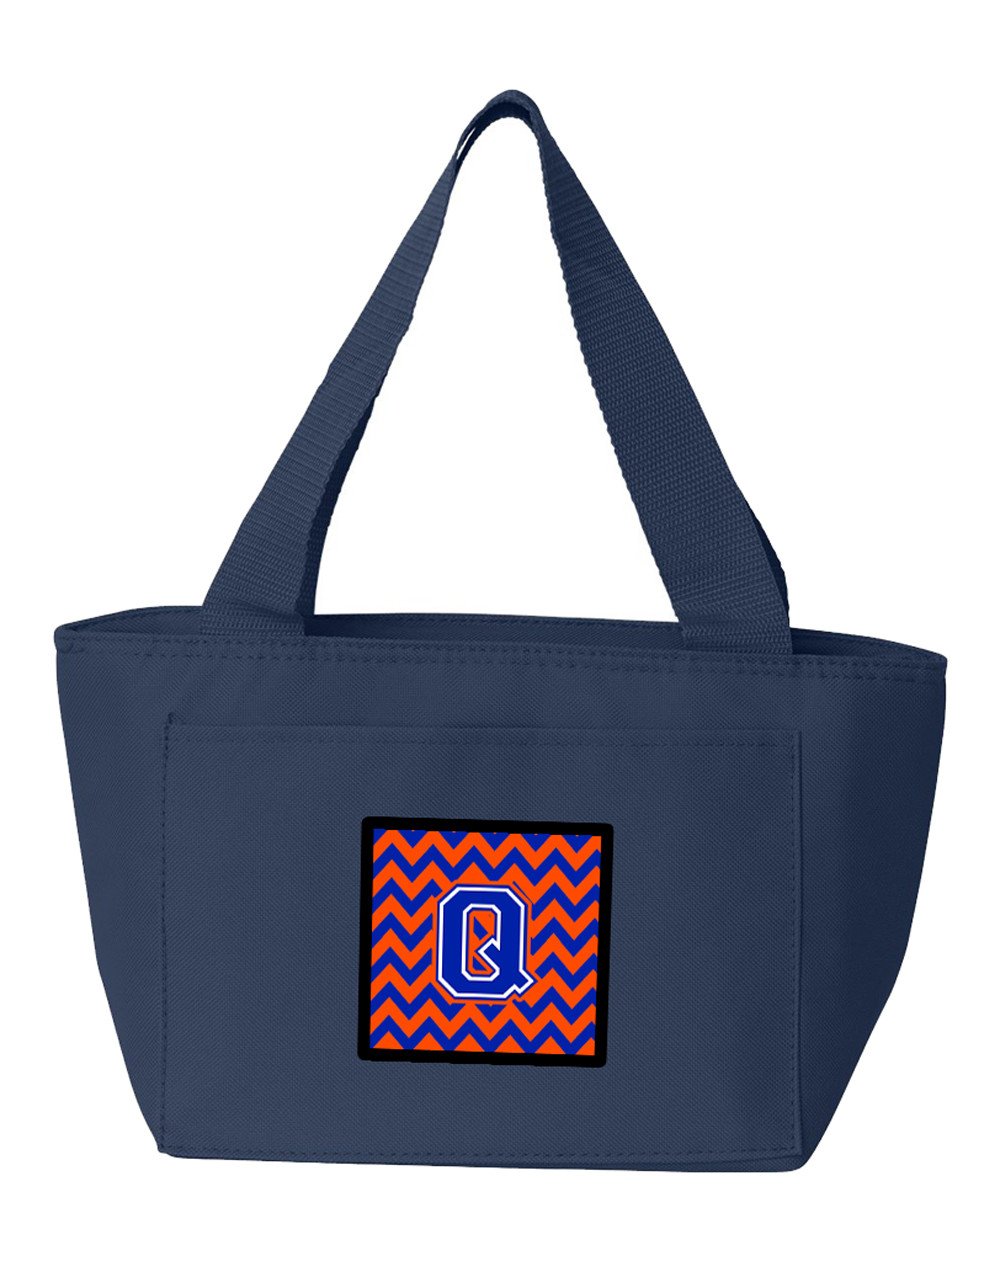 Letter Q Chevron Orange and Blue Lunch Bag CJ1044-QNA-8808 by Caroline's Treasures